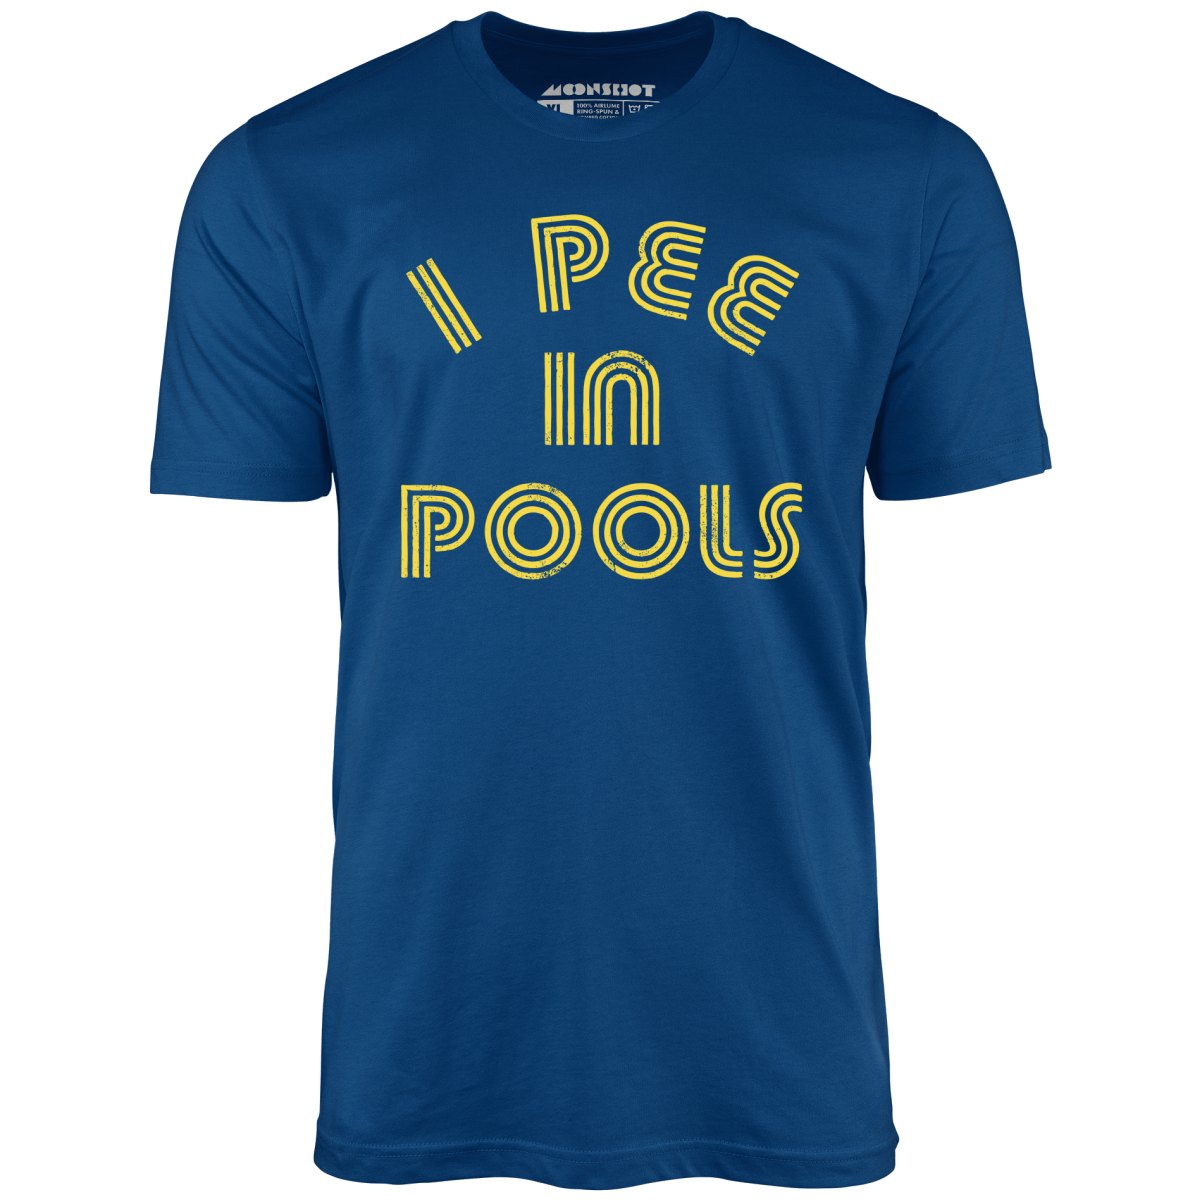 I Pee in Pools - Unisex T-Shirt